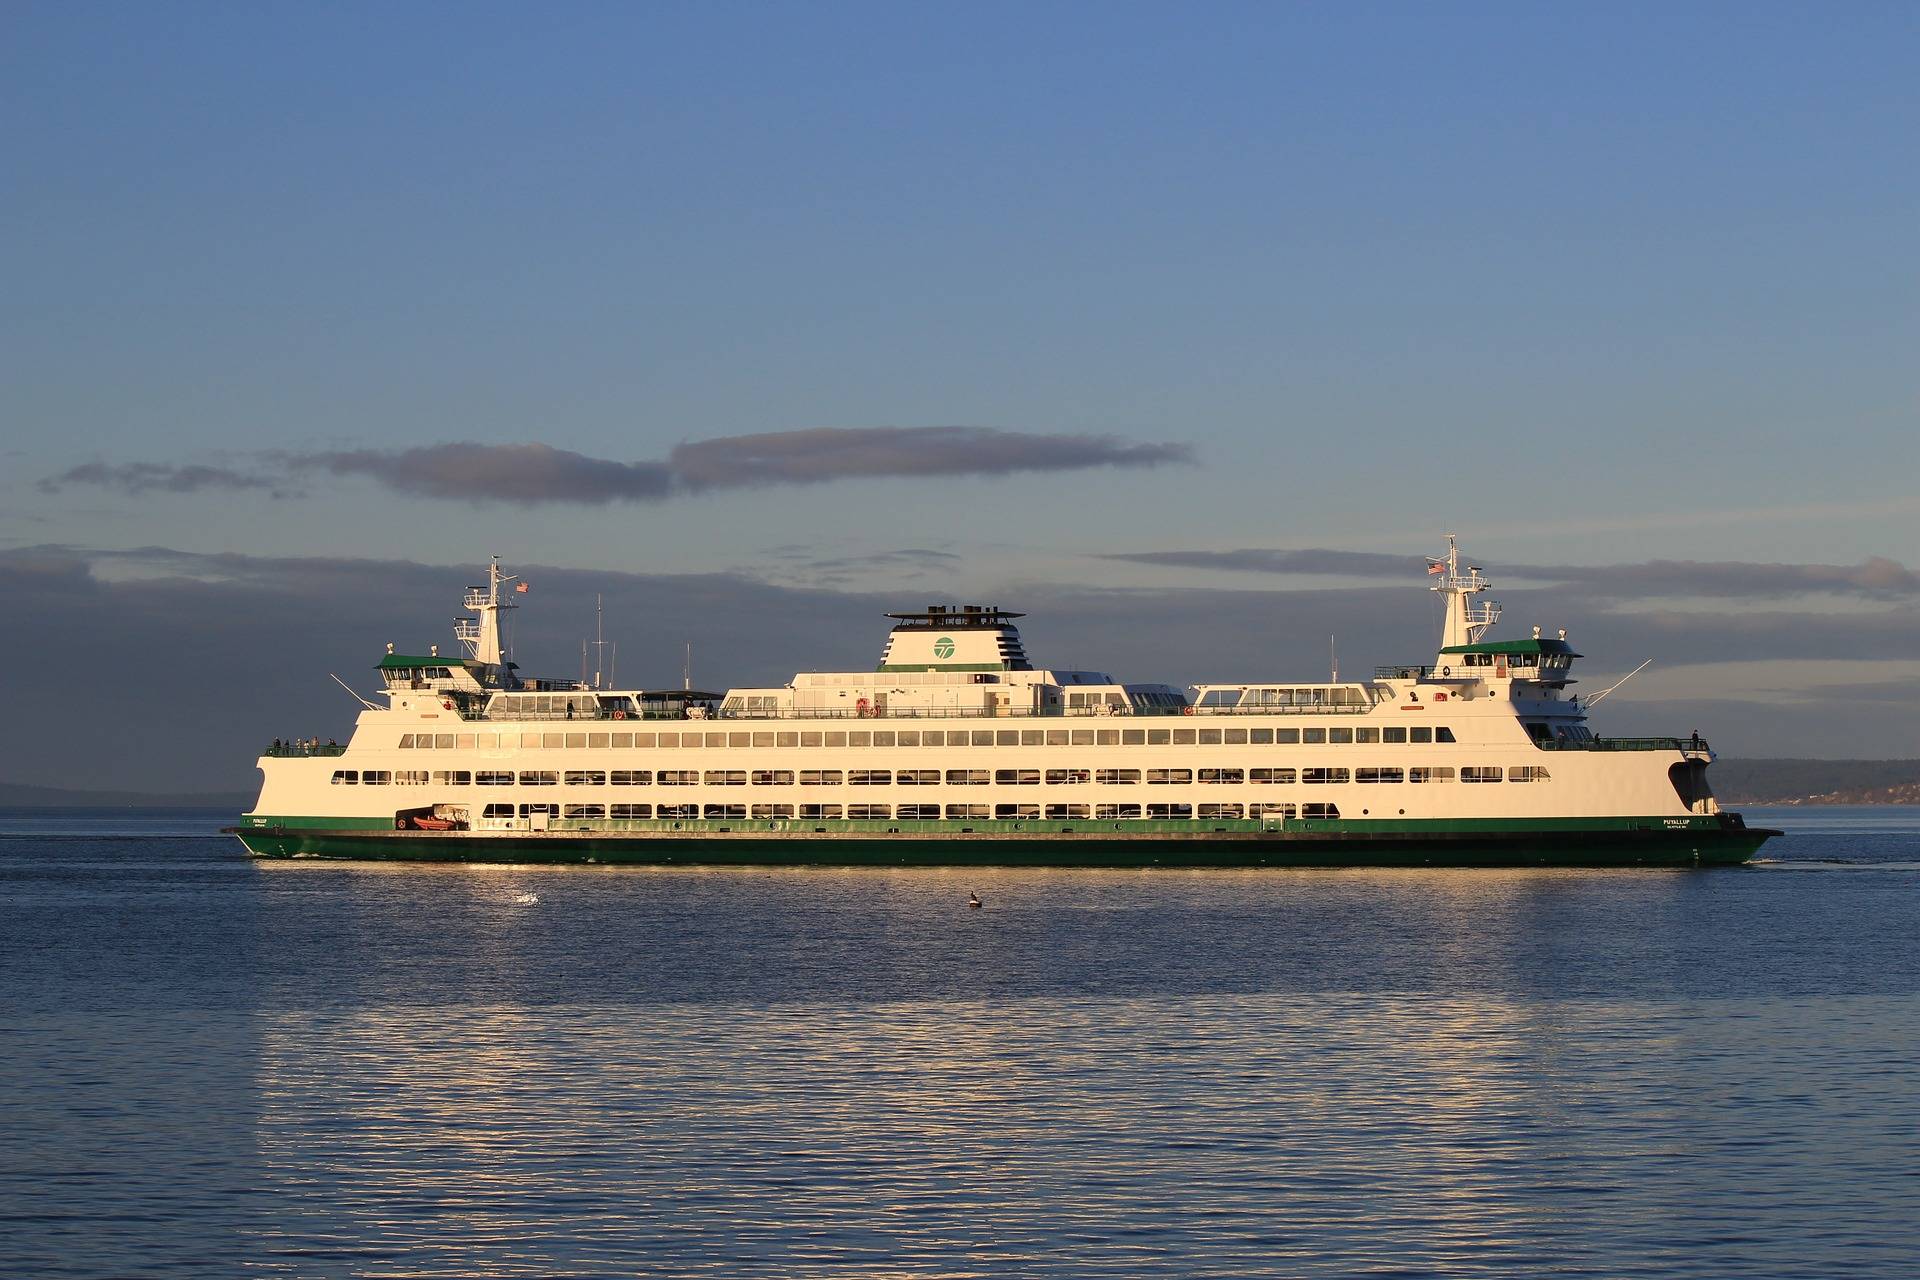 Ferries talks fares in Friday Harbor